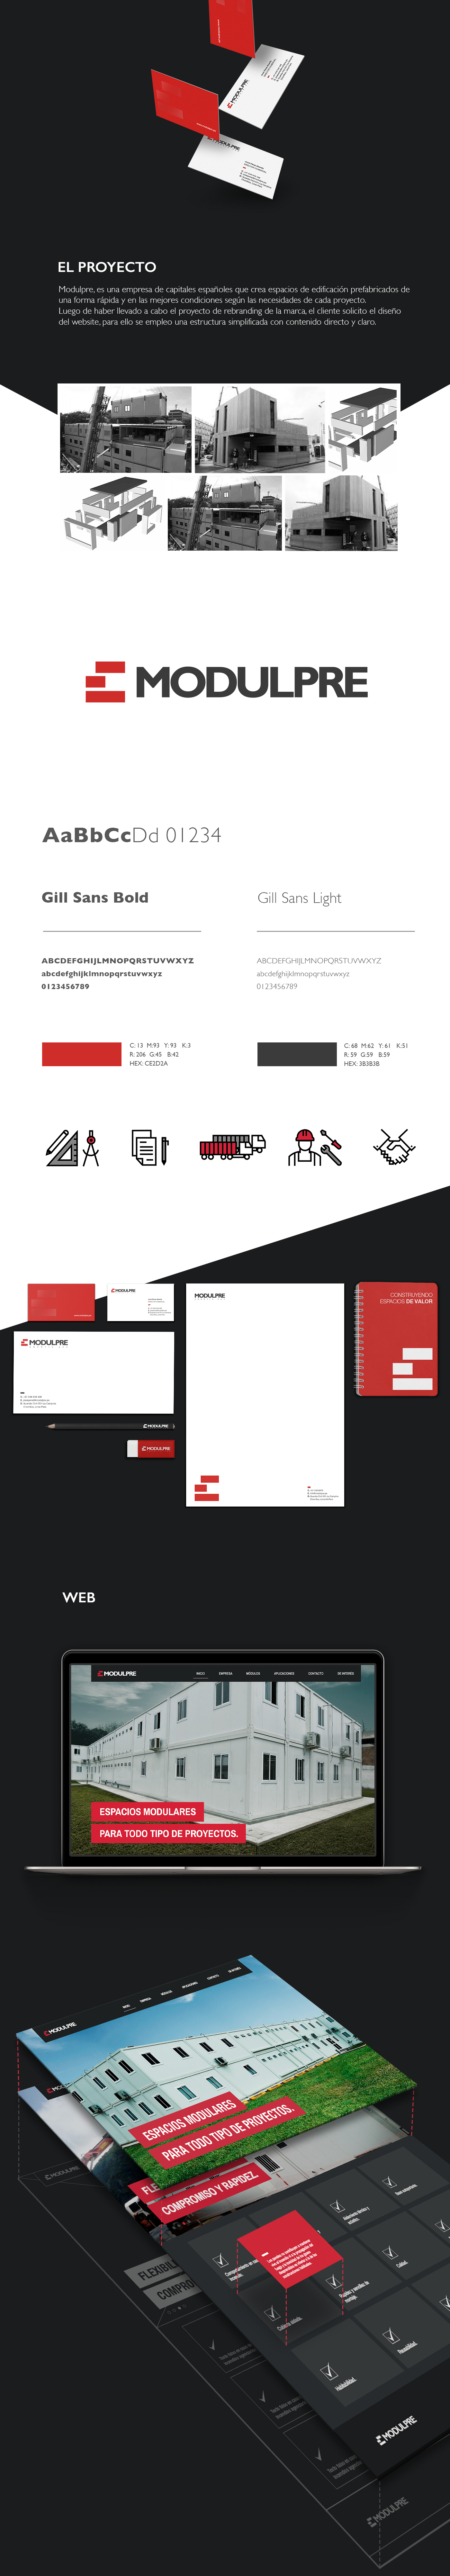 modulpre branding  brochure imagen corporativa modular construccion UI ux Web